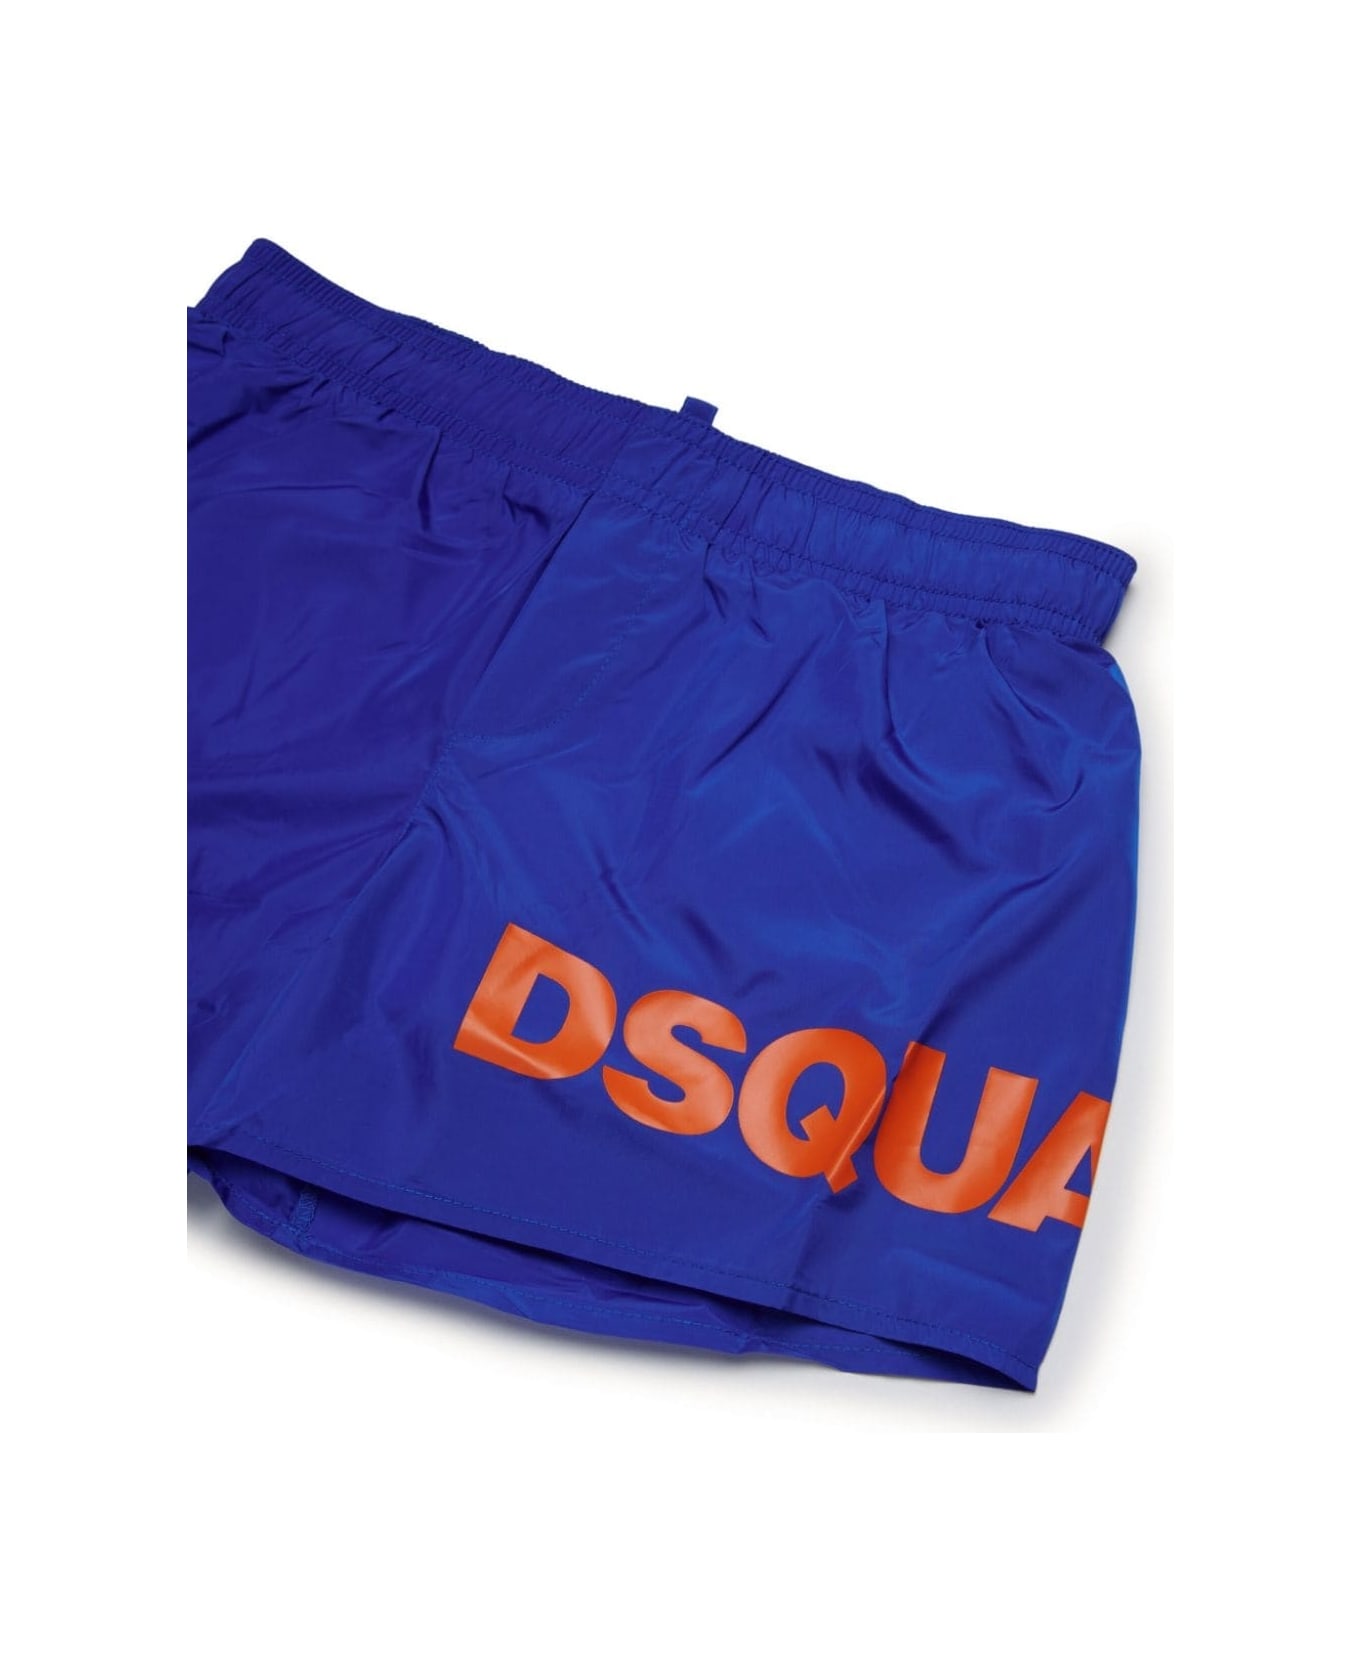 Dsquared2 Costume Con Stampa - Deep Ultramarine